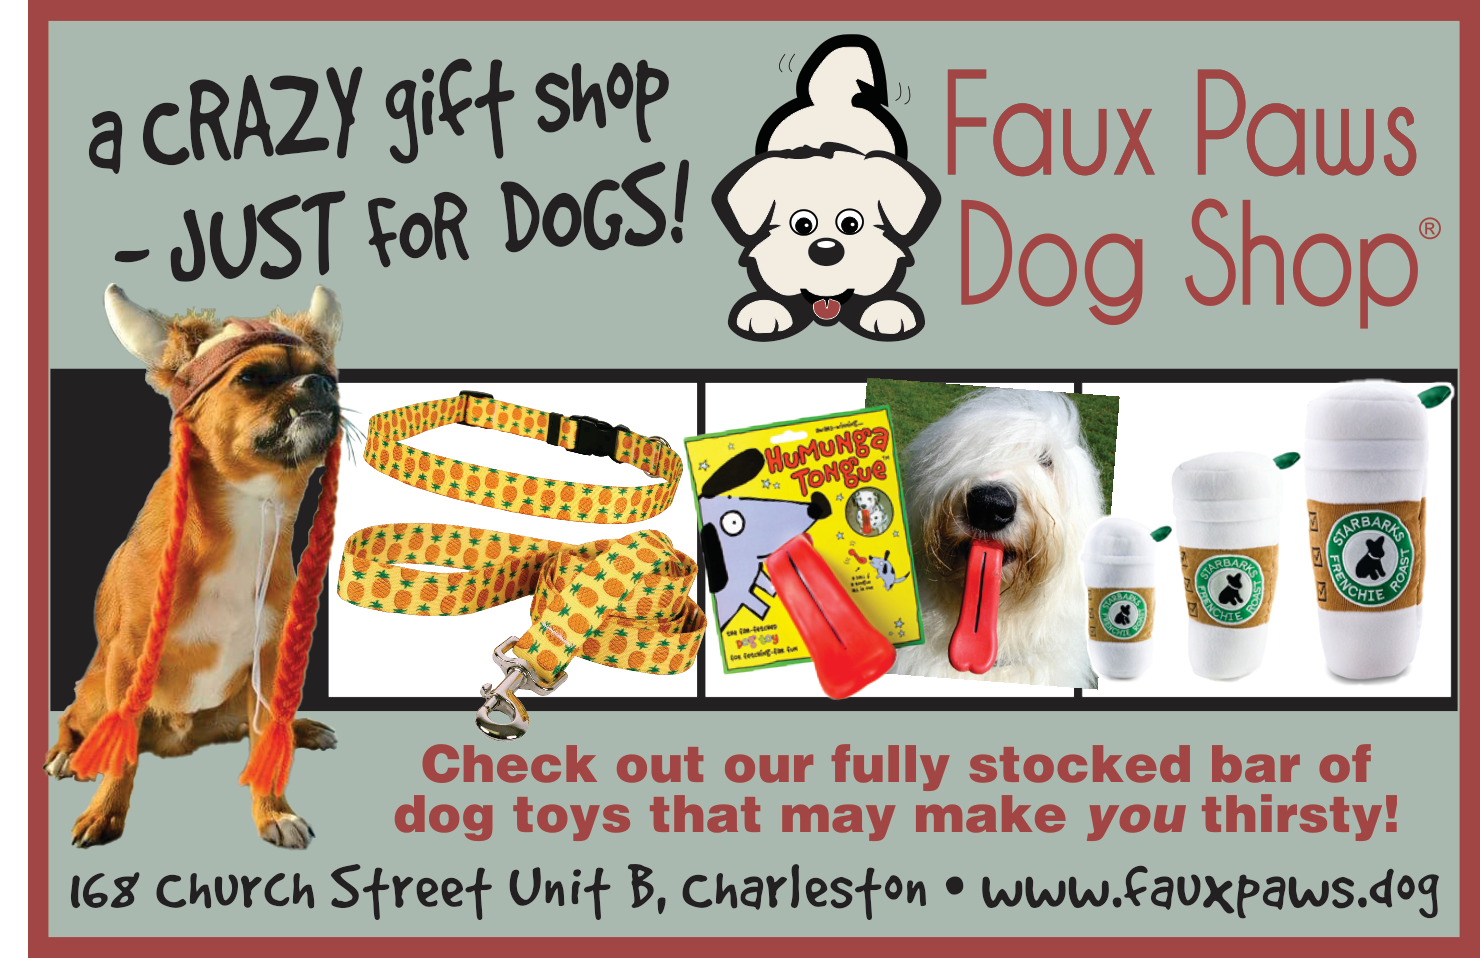 Faux Paws Dog Shop Print Ad